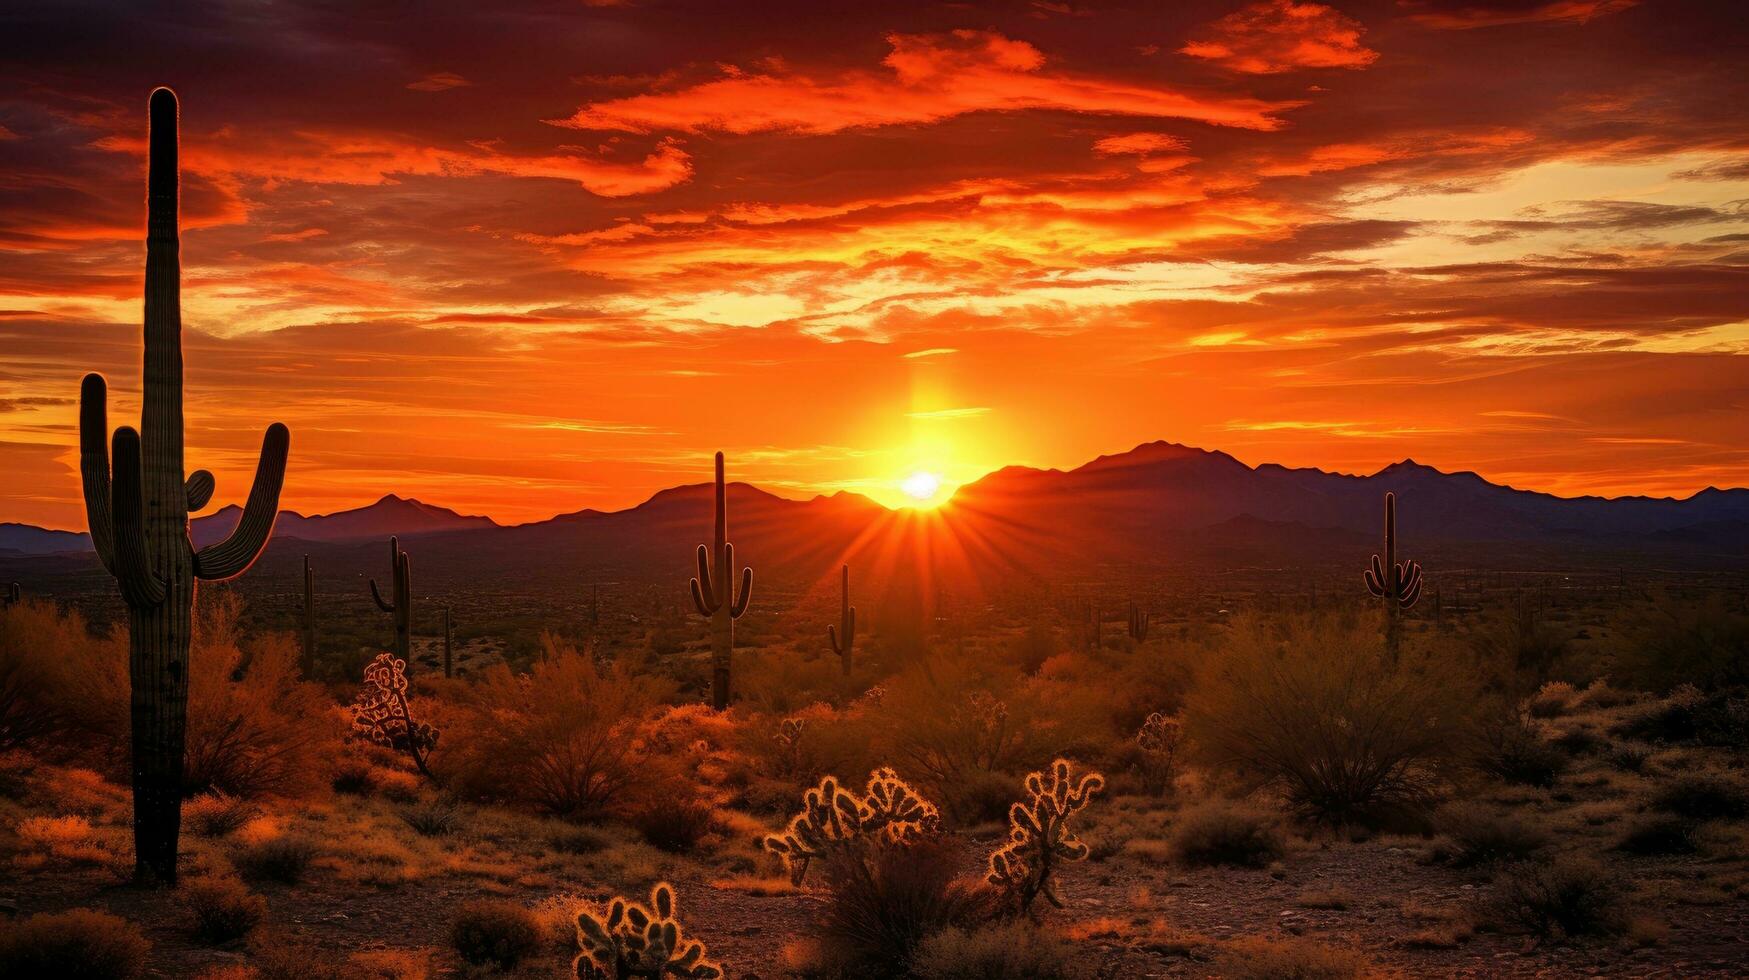 Sonoran Desert sunset with Saguaro s silhouette illuminated photo